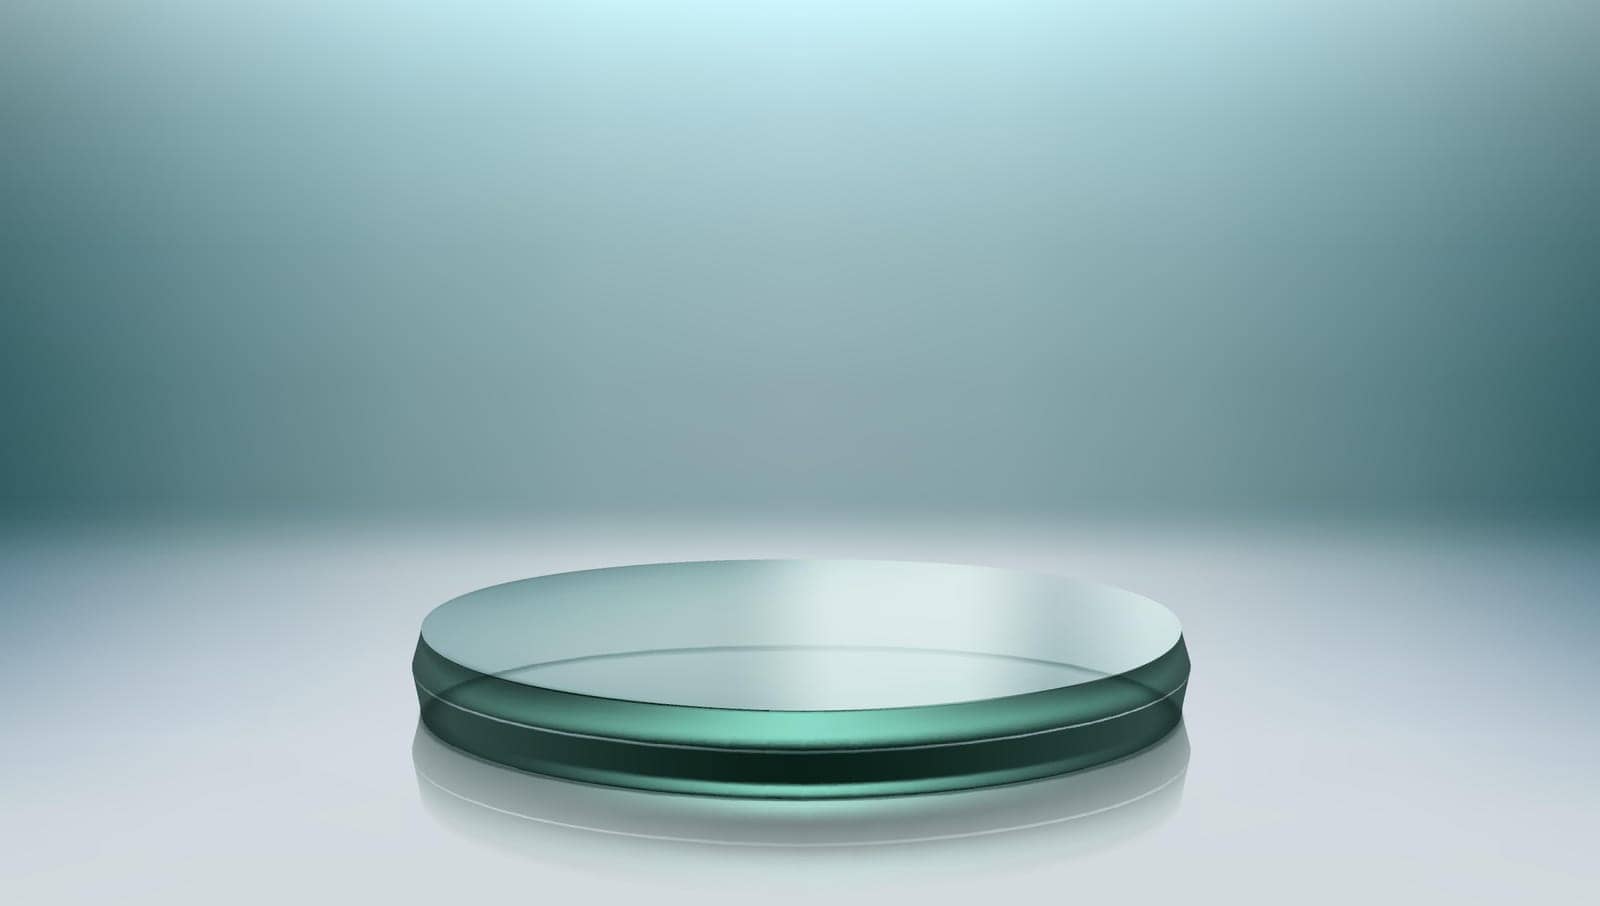 Luxury Glass Podium, Cylinder Glossy Pedestal Showcase. EPS10 Vector